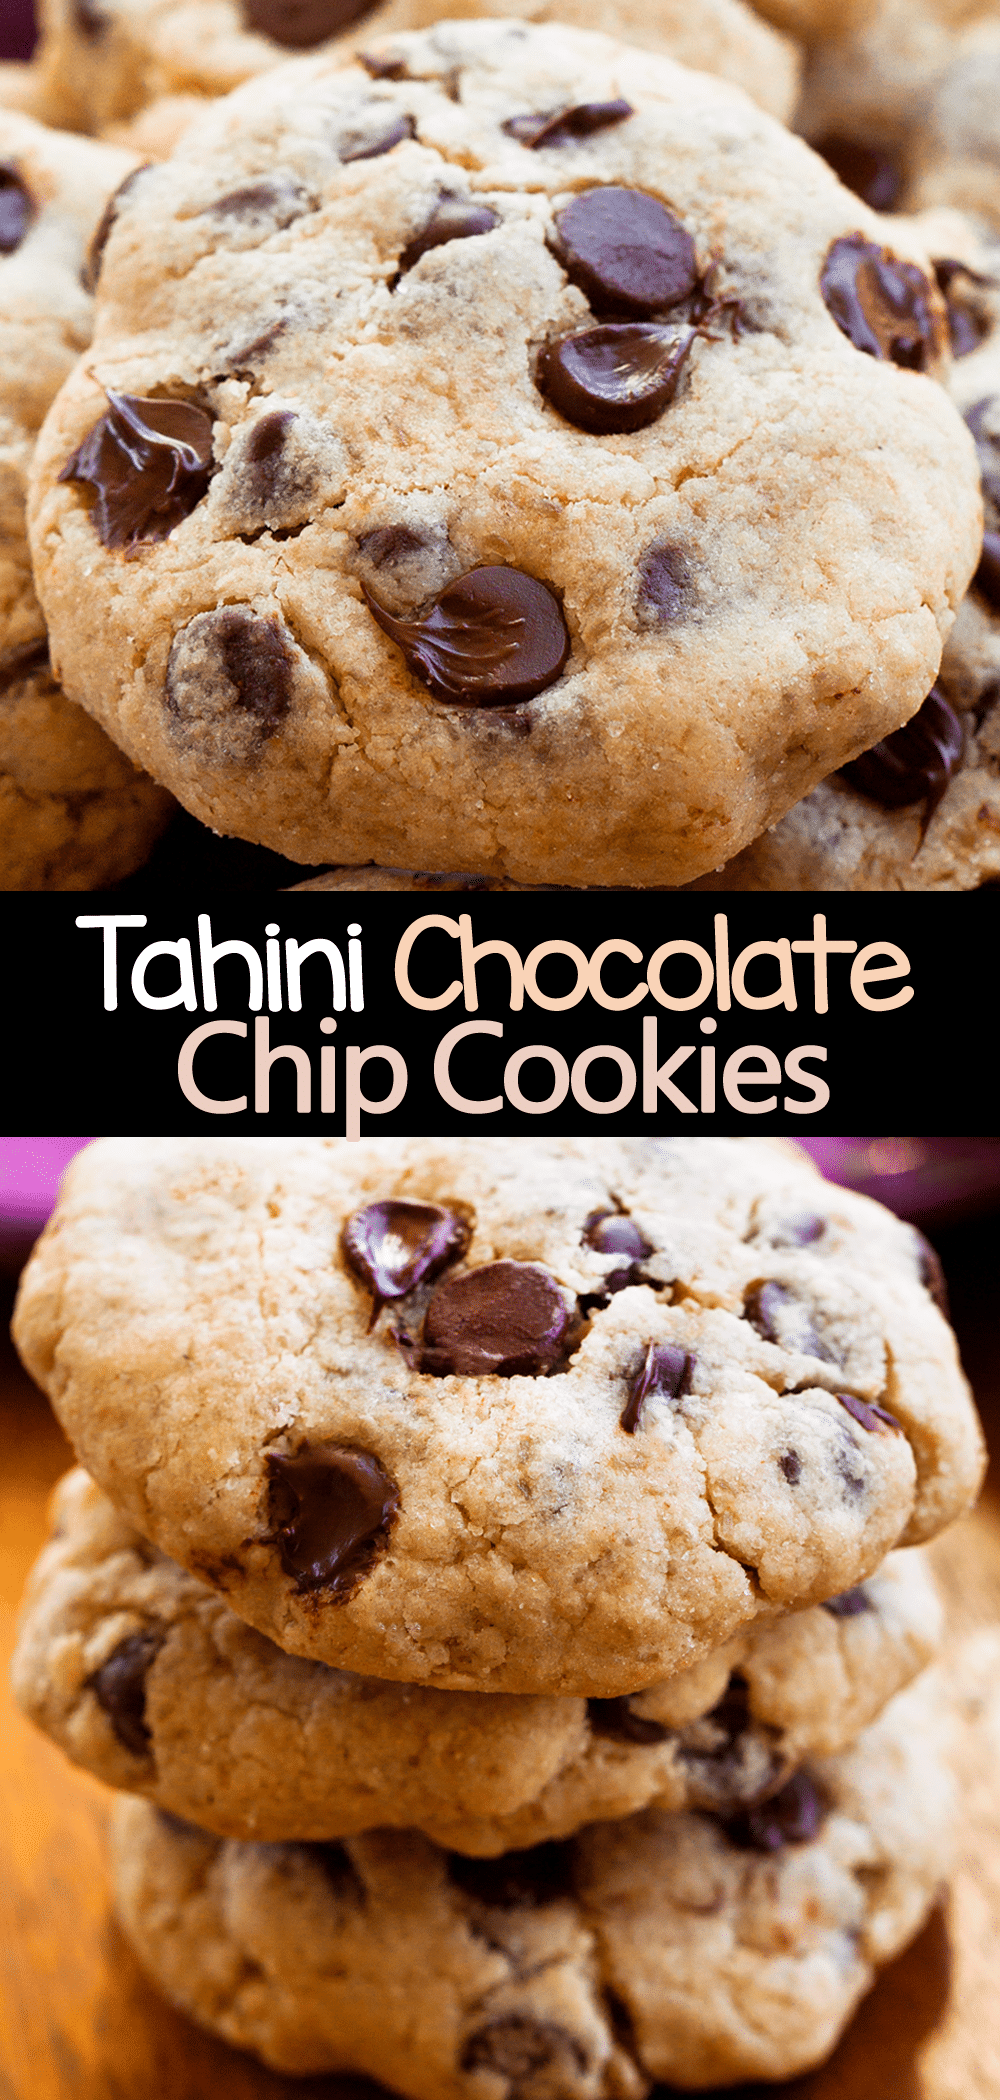 Galletas Tahini ¡La mejor receta de galletas con chispas